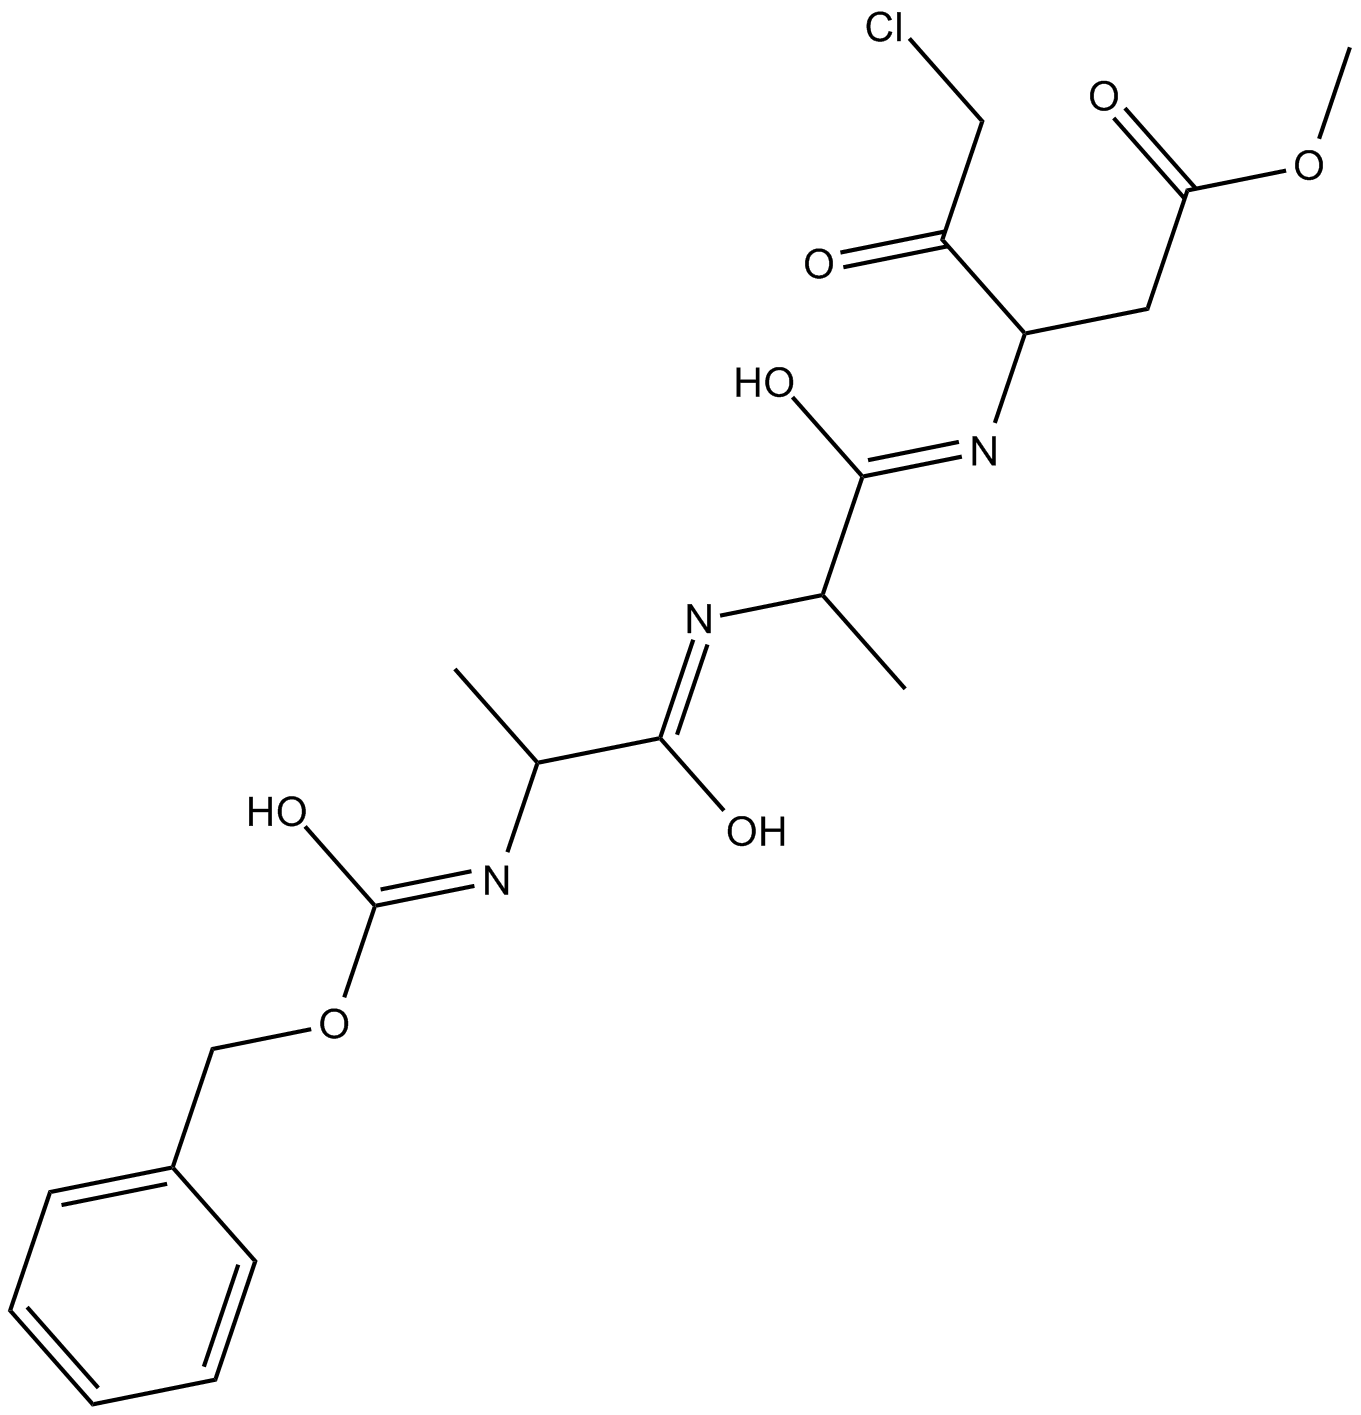 Granzyme B Inhibitor Z-AAD-CH2Cl